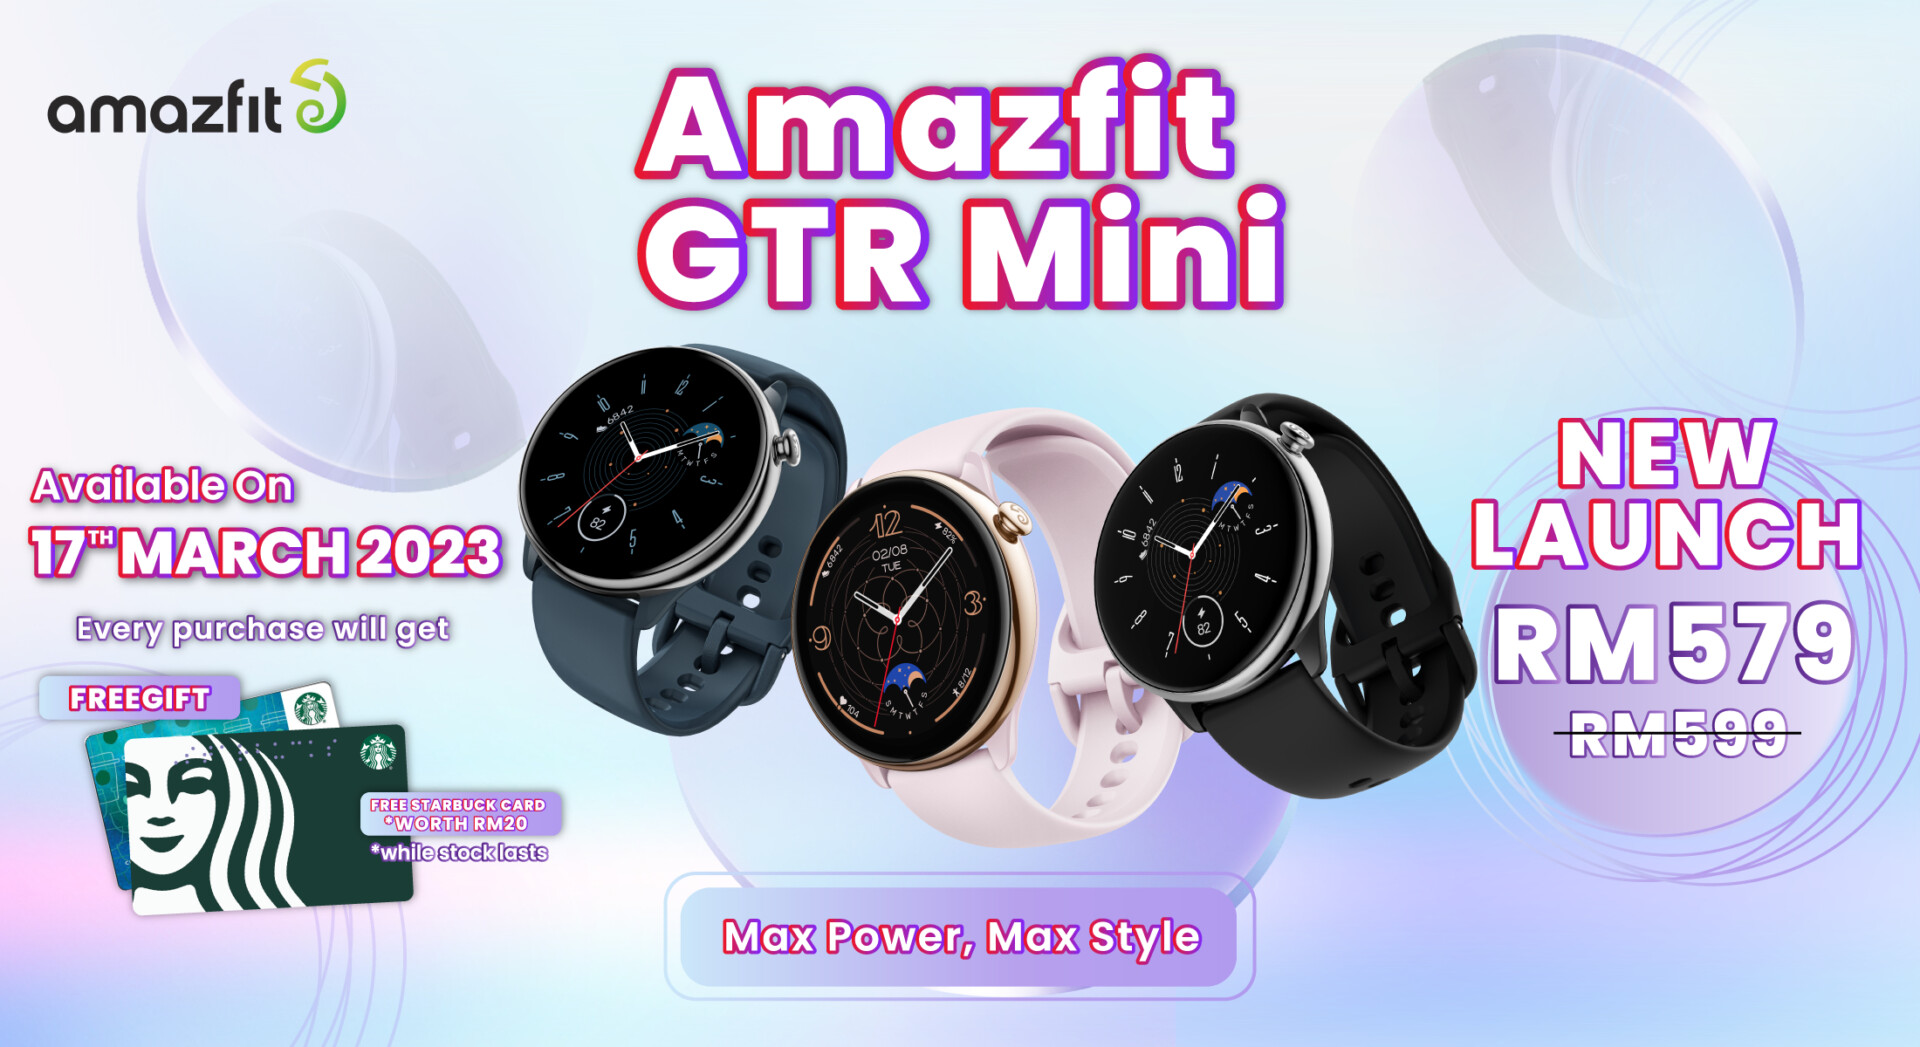 Amazfit Launches GTR Mini in Malaysia